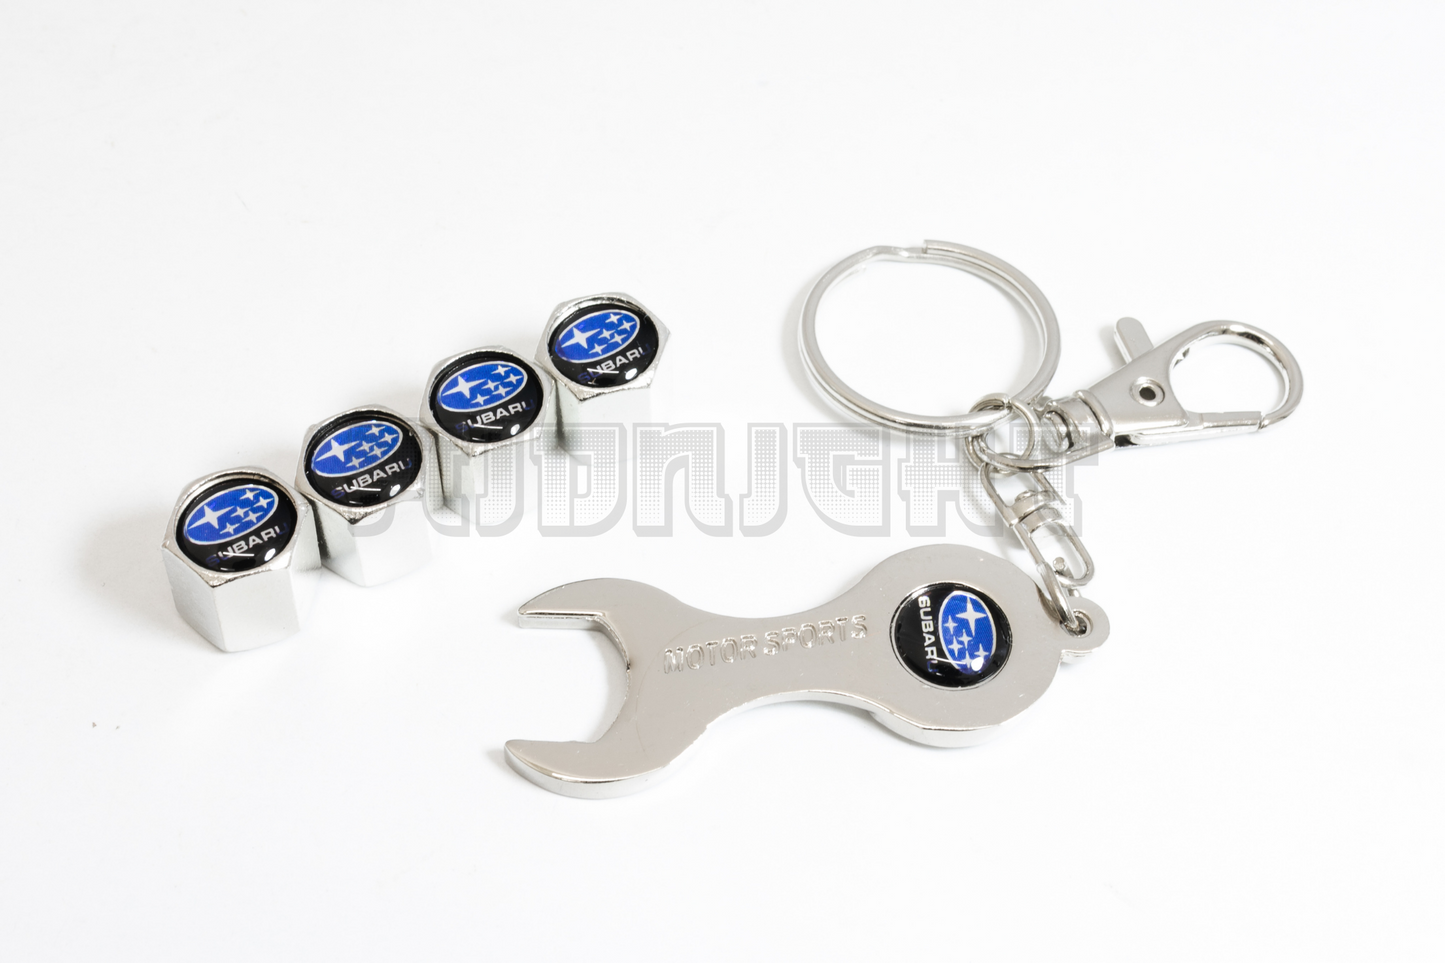 Subaru Valve Stem Caps With Wrench Keychain